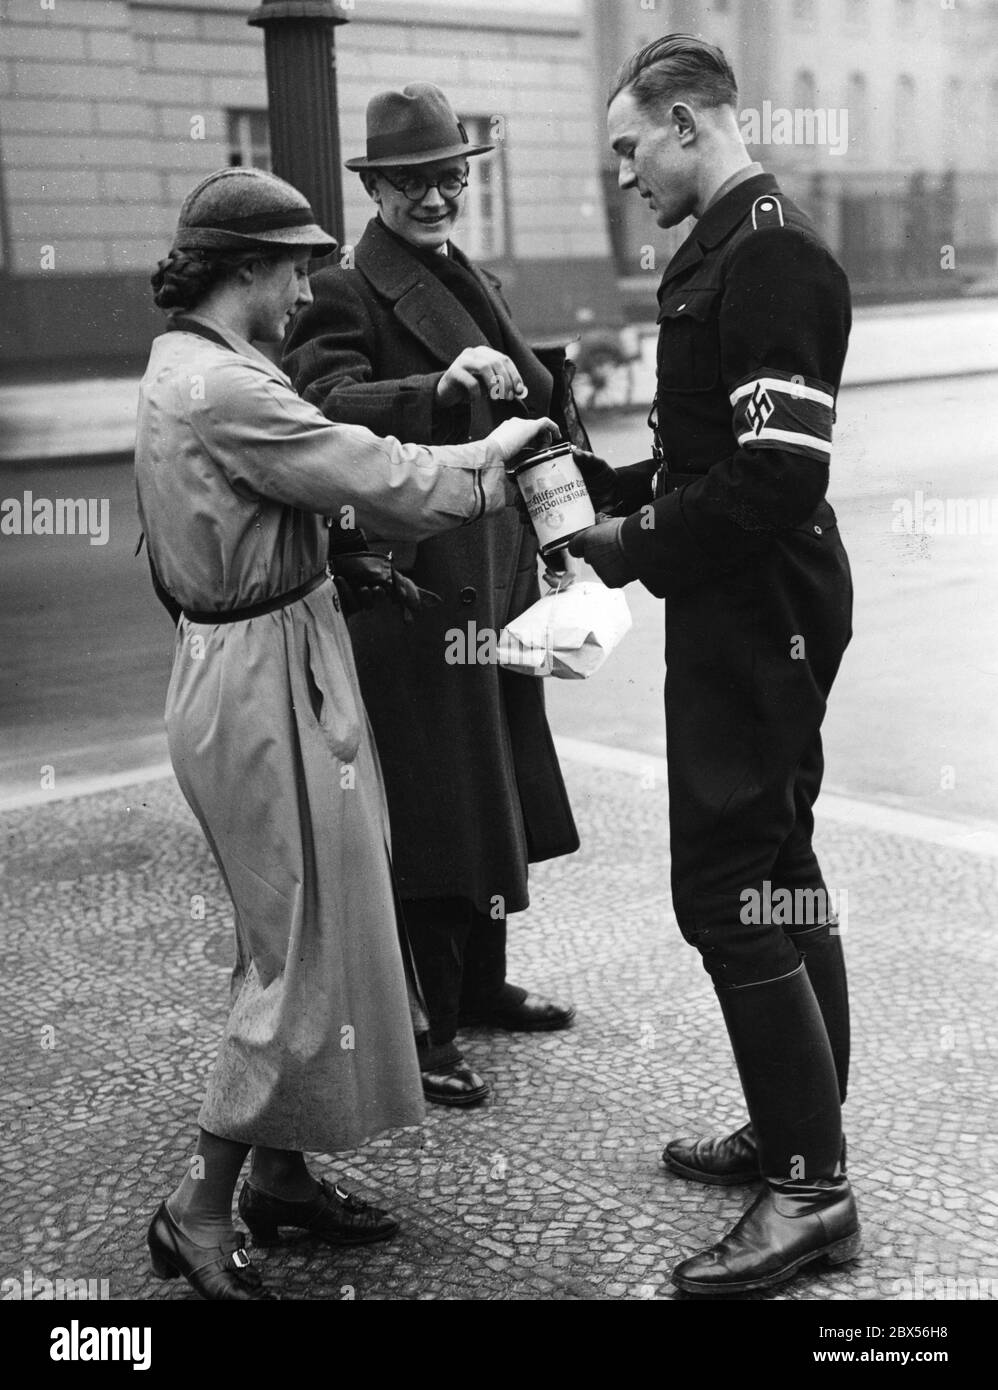 Members of the NSDStB (in uniform) raise money for the Winterhilfswerk des Deutschen Volkes (English: Winter Relief of the German People). Stock Photo